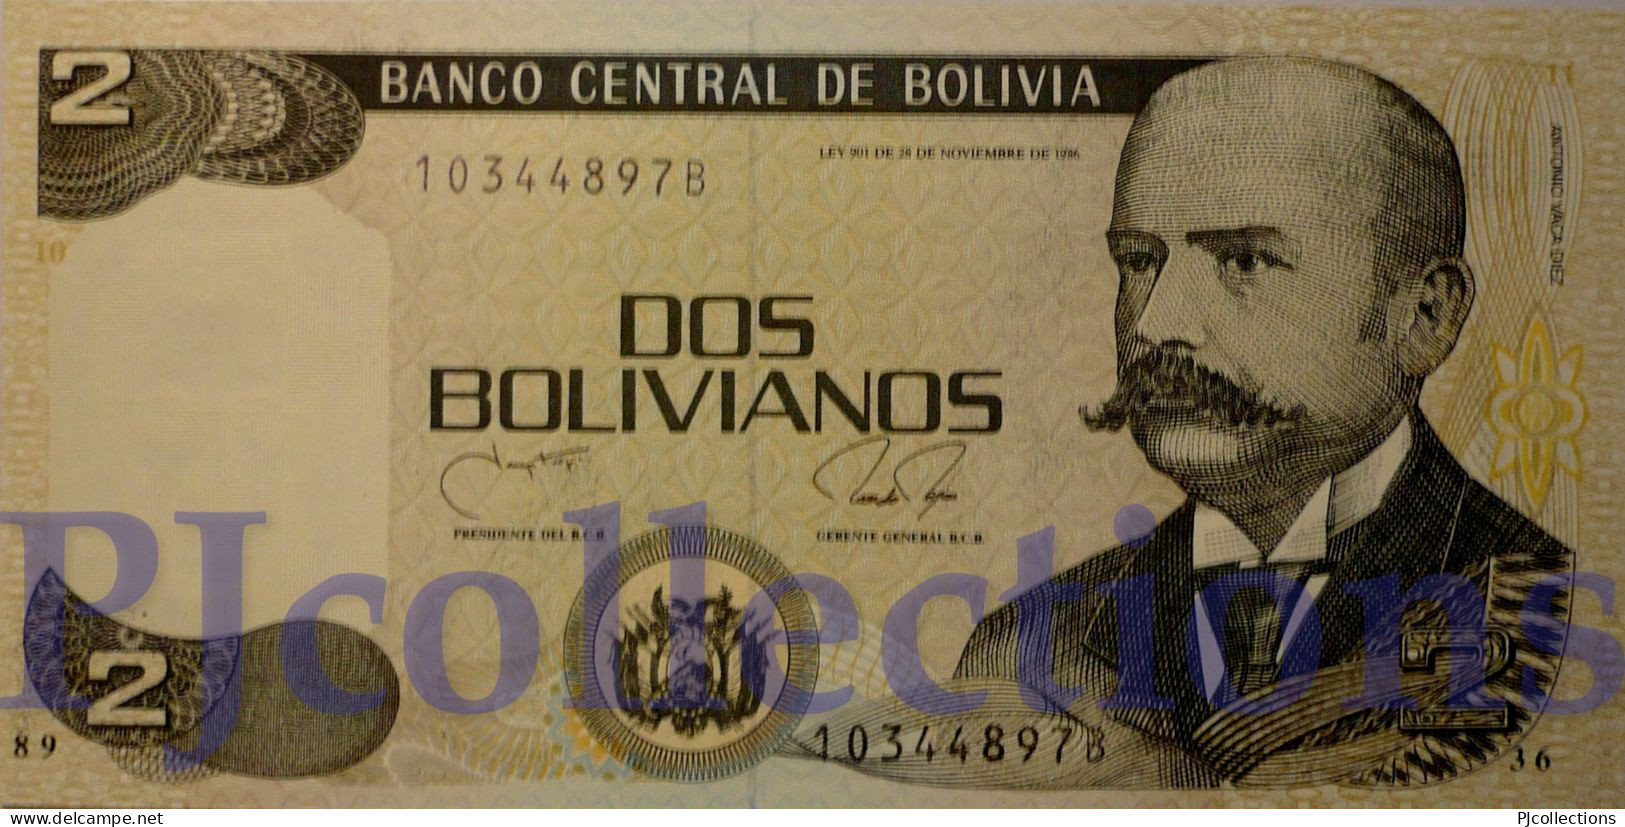 BOLIVIA 2 BOLIVANOS 1990 PICK 202b UNC - Bolivien